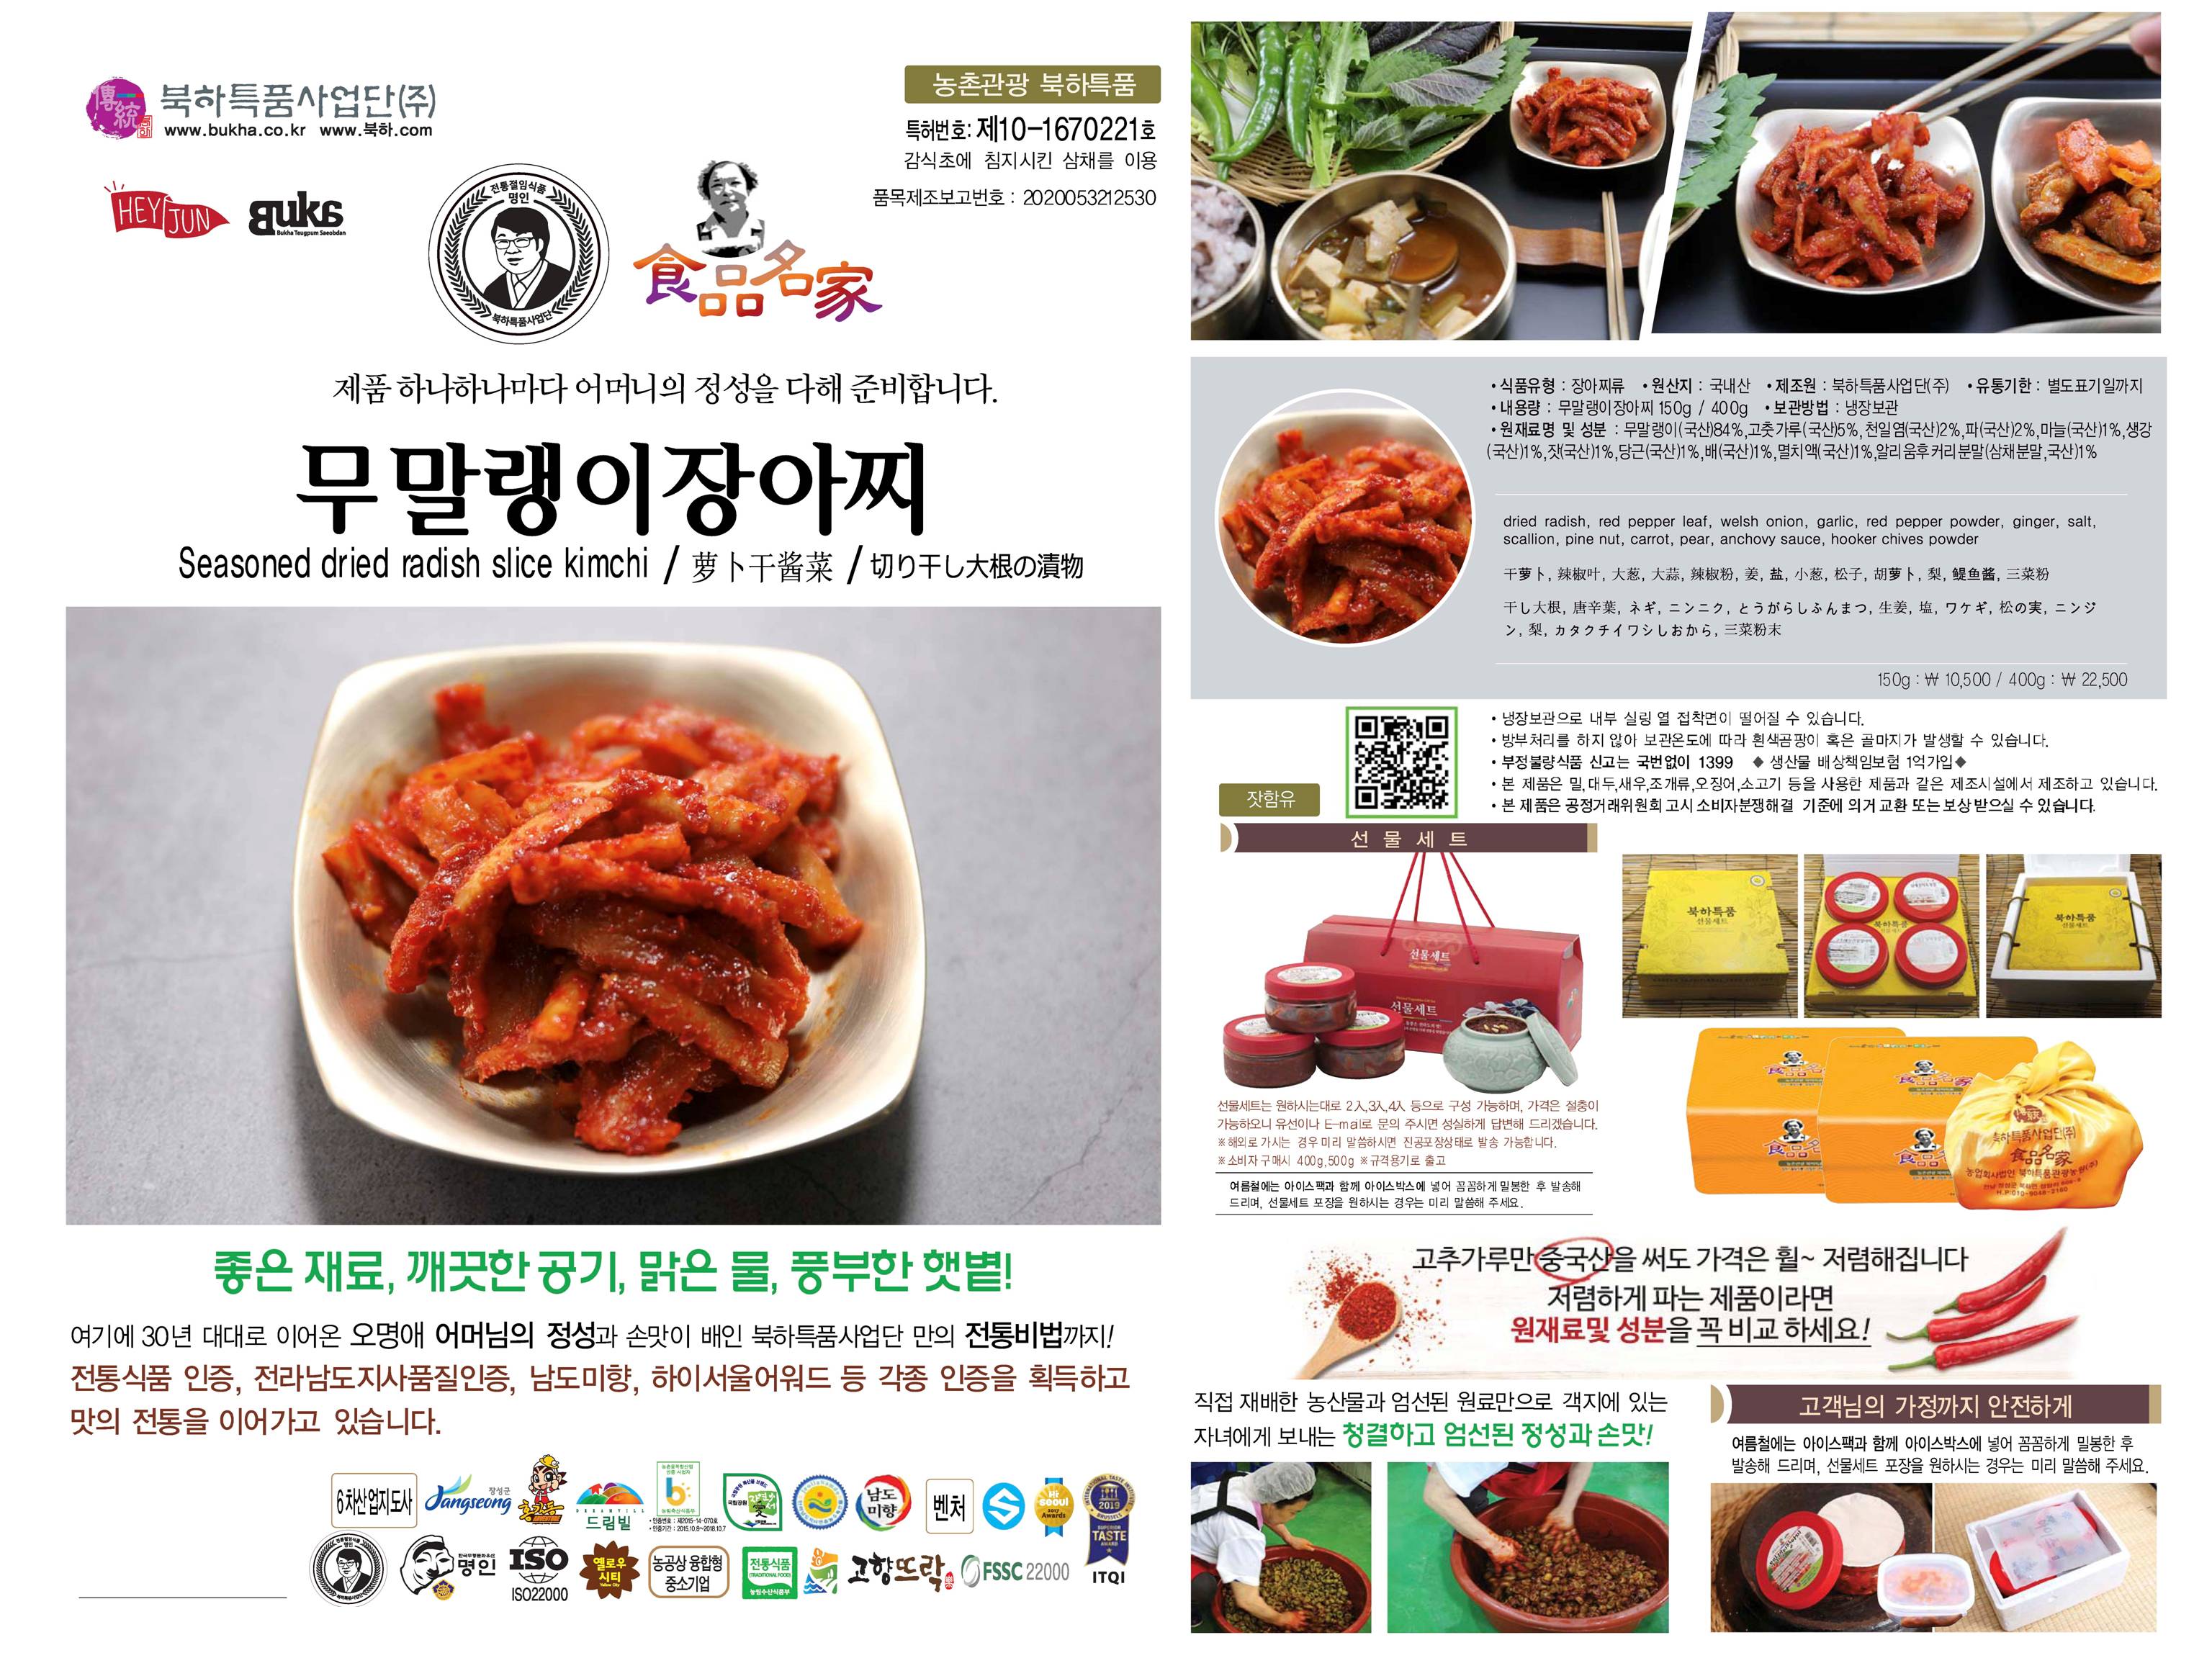 seasoned radish slice kimchi